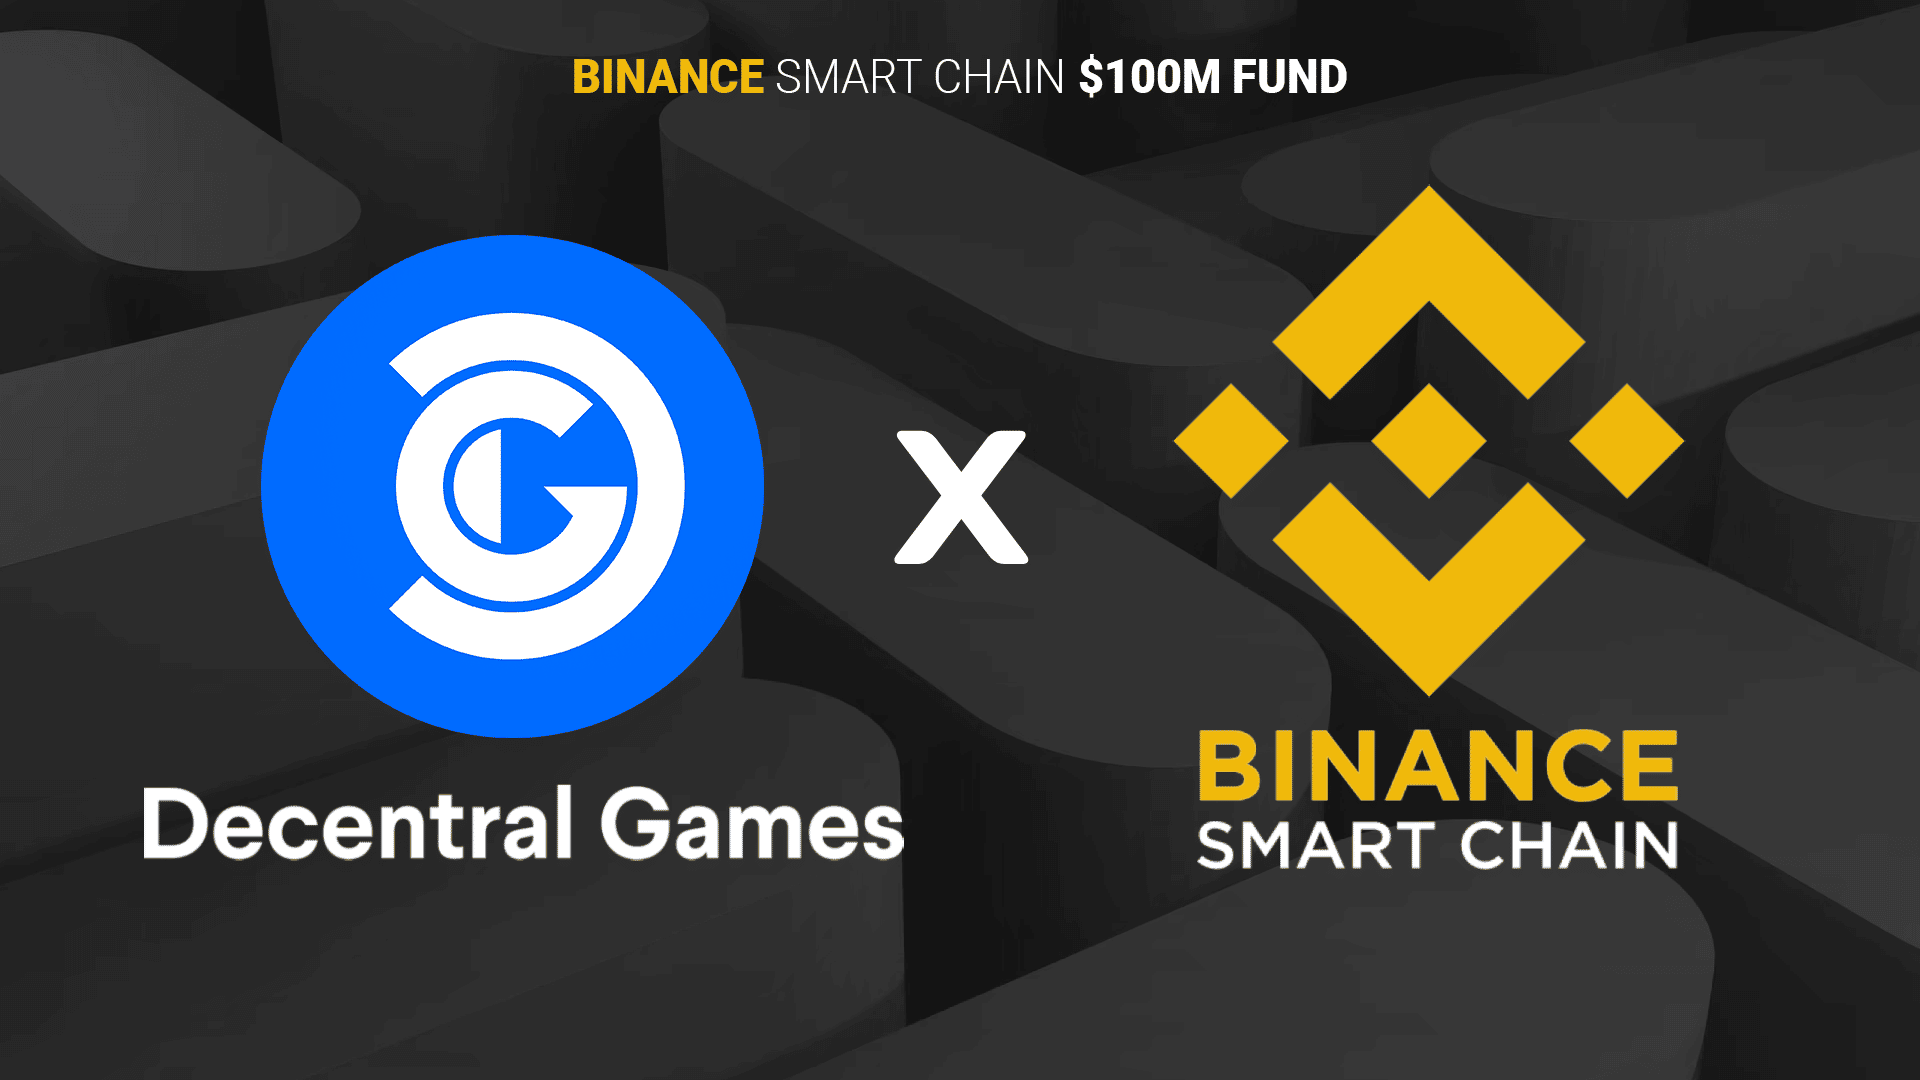 Binance Smart Chain Funds Decentral Games via its $1 Billion Accelerator Program